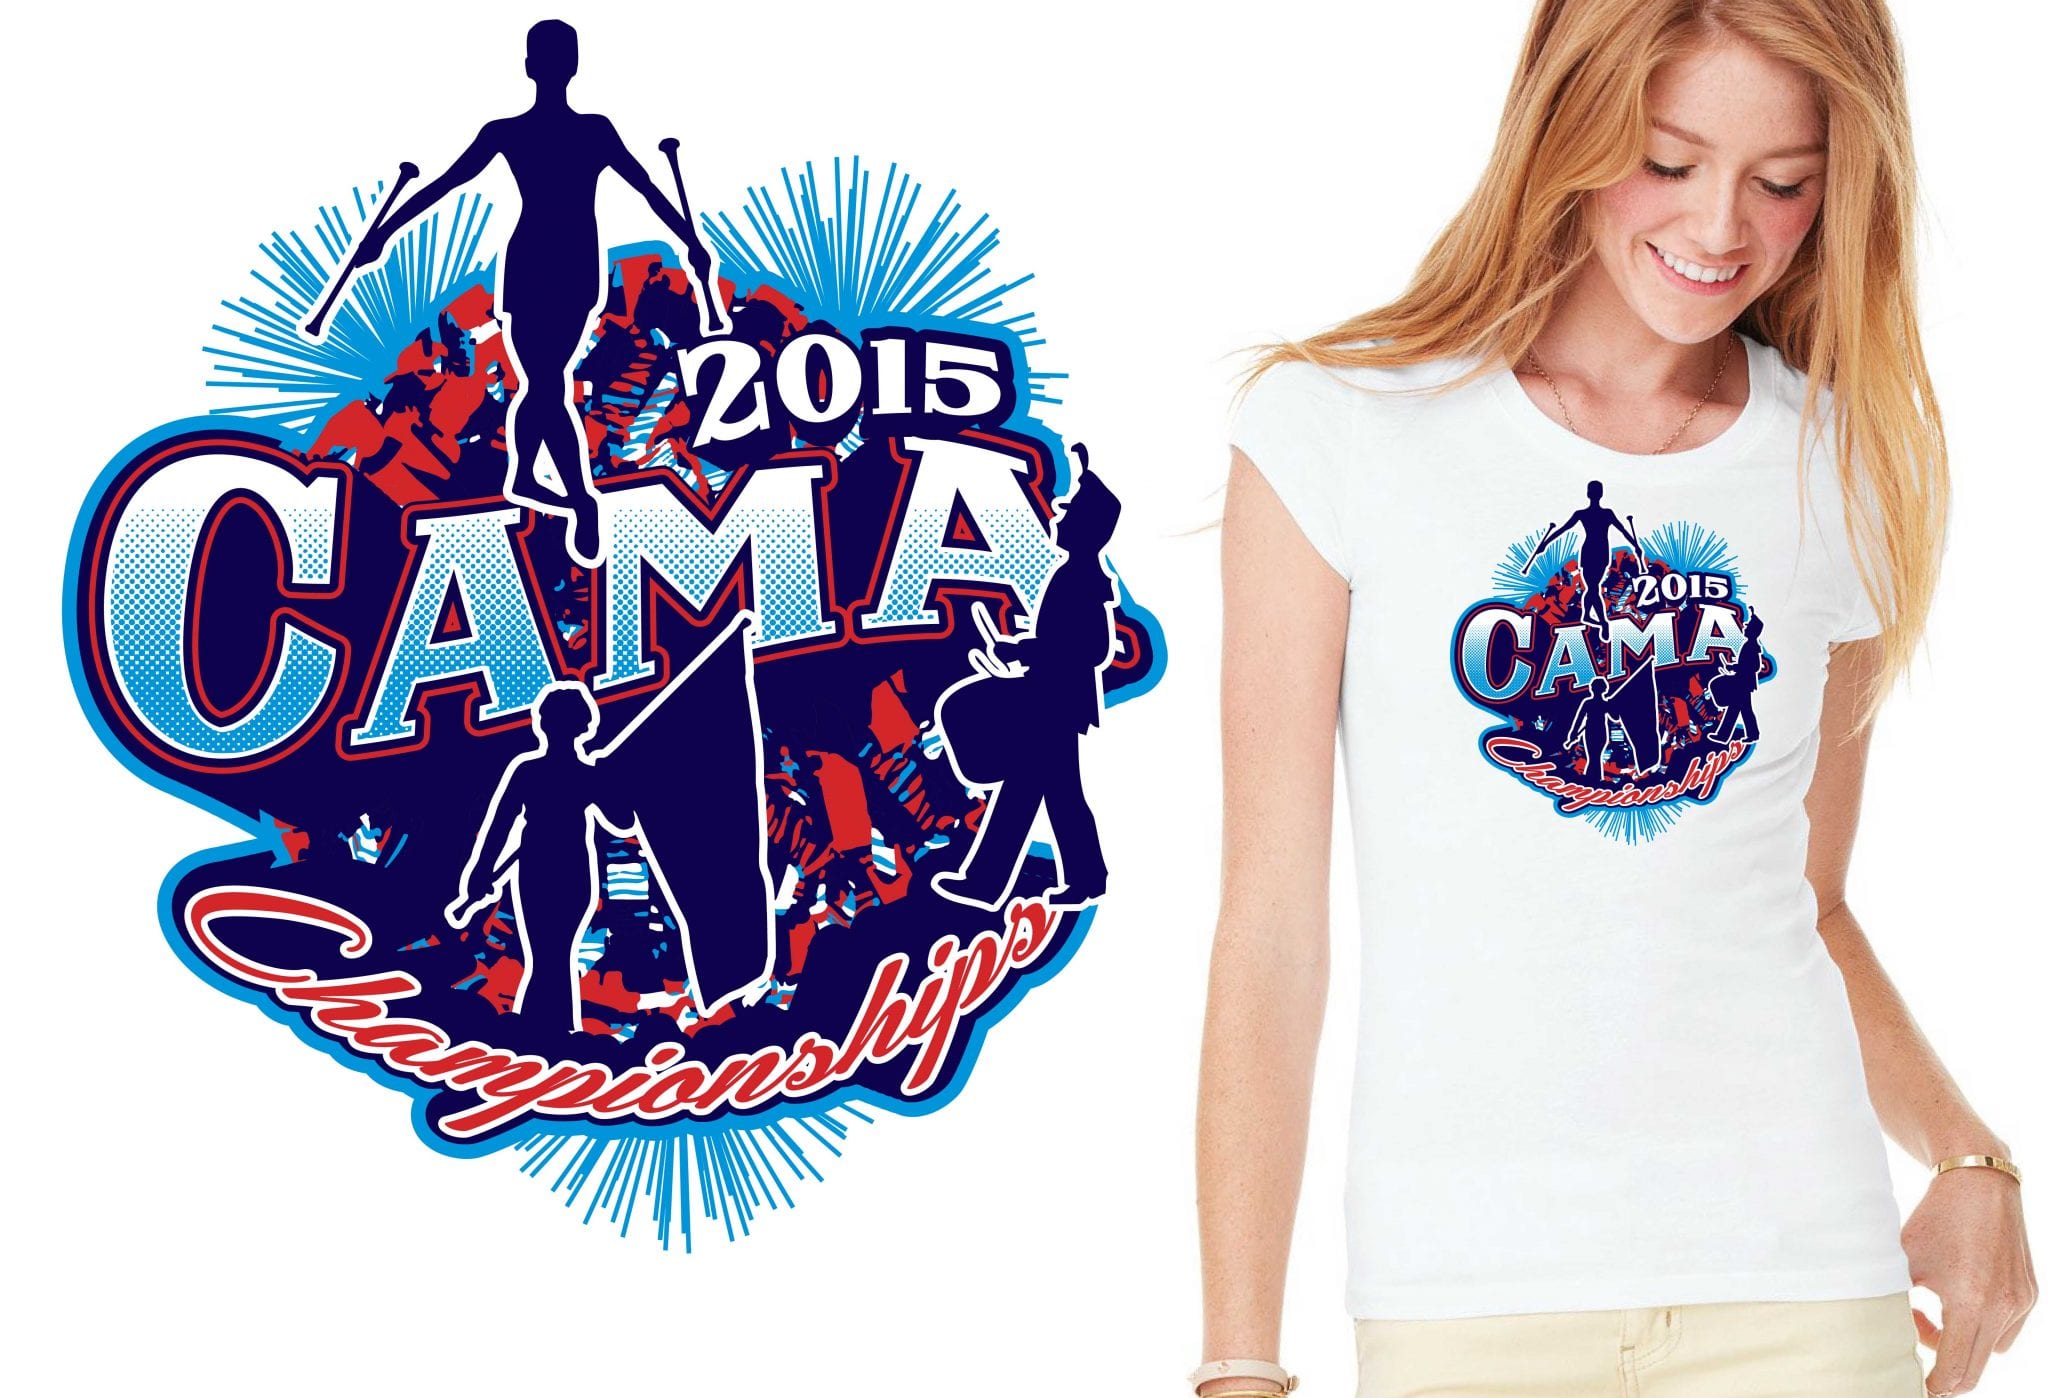 2015 CAMA Championships cool band tshirt design